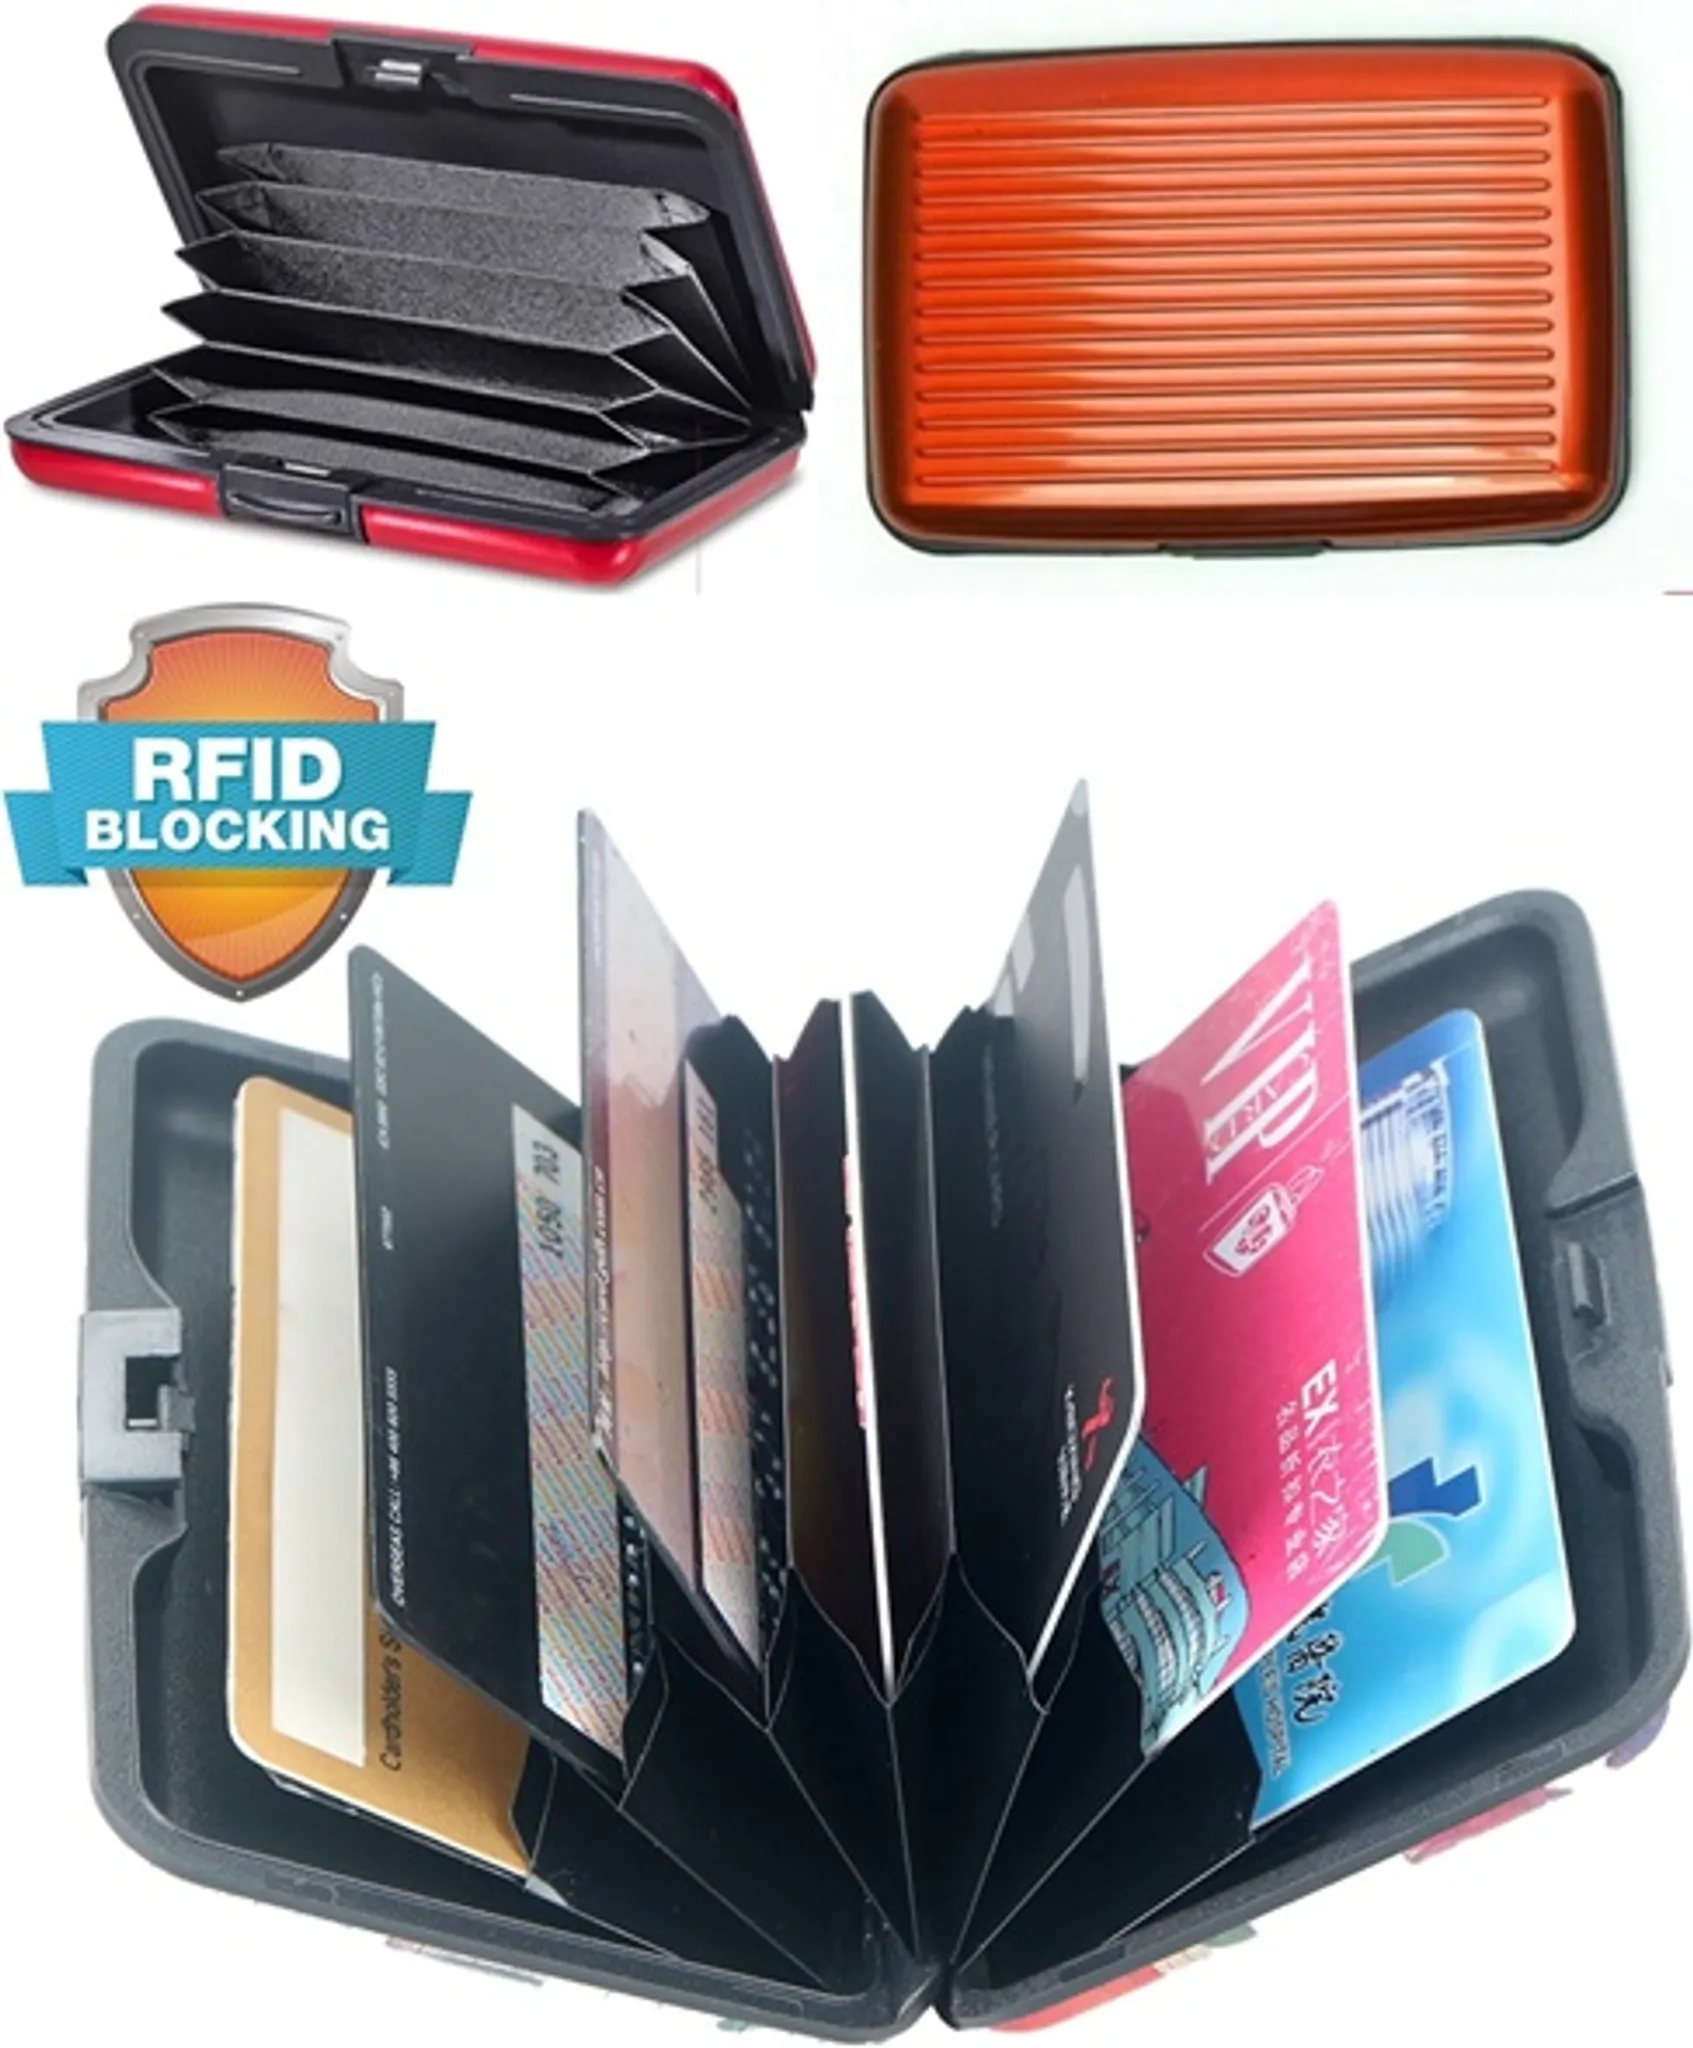 Kreditkartenetui RFID safe OnlineShop.Portemonnaie Online Shop